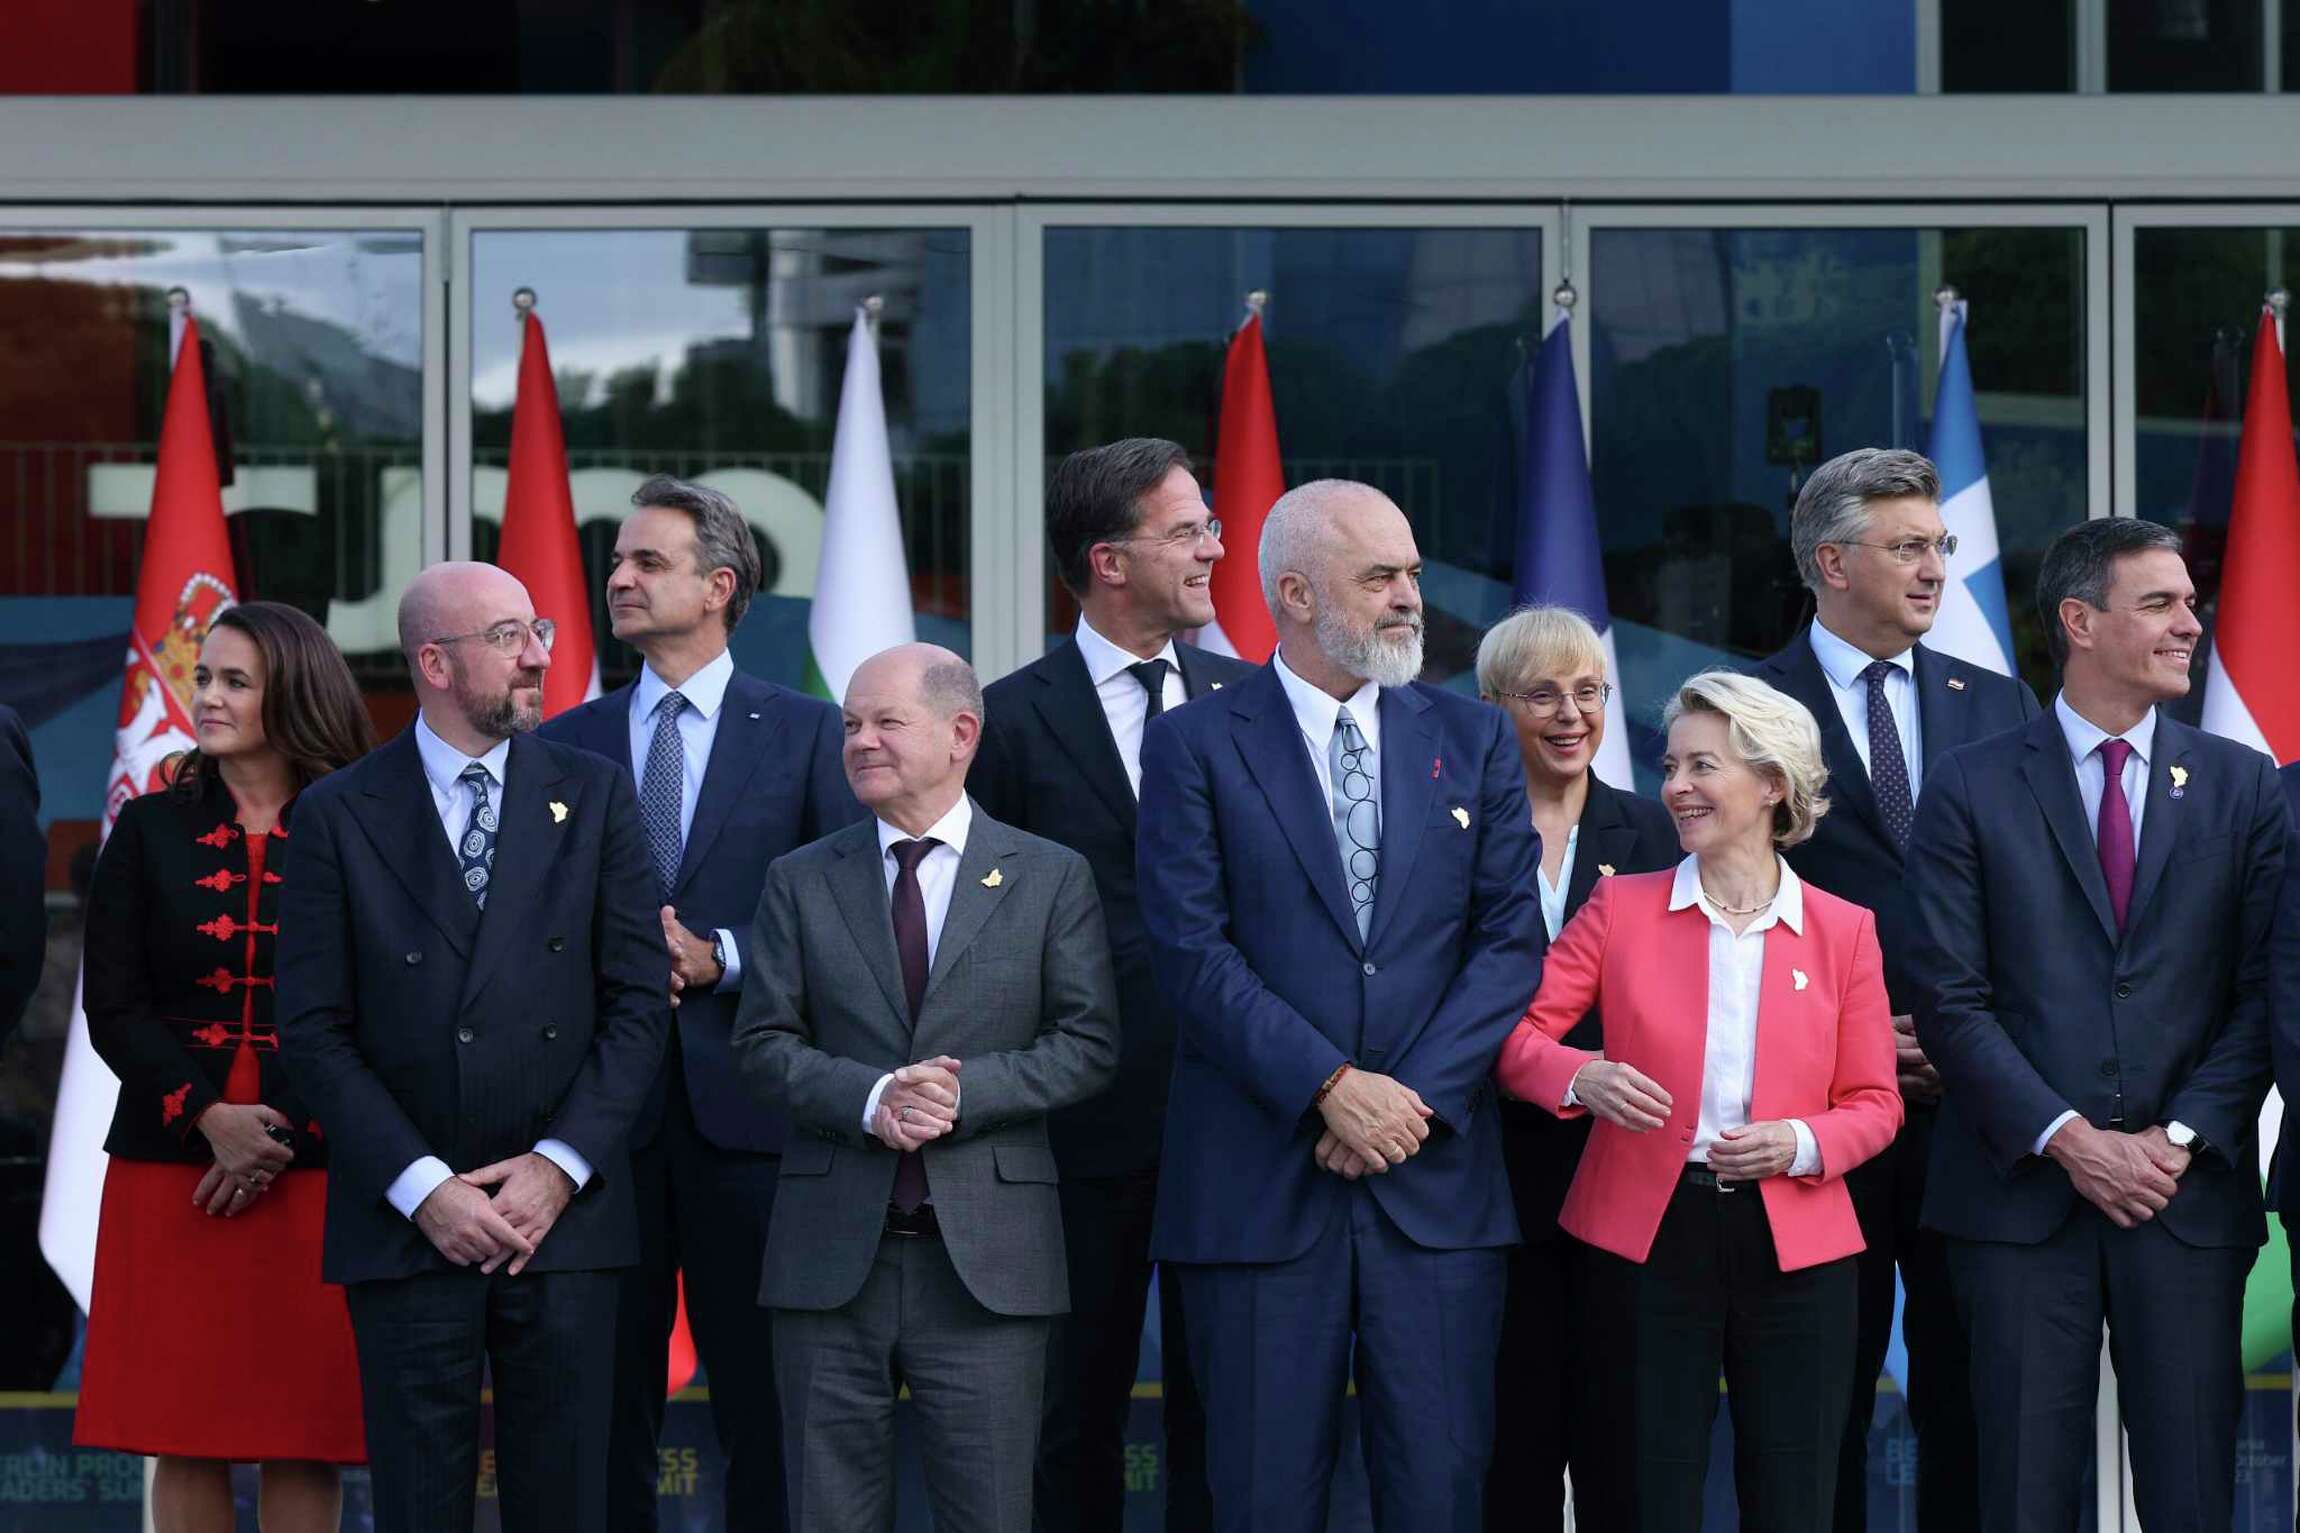 BiEPAG Reacts: The Berlin Summit in Tirana